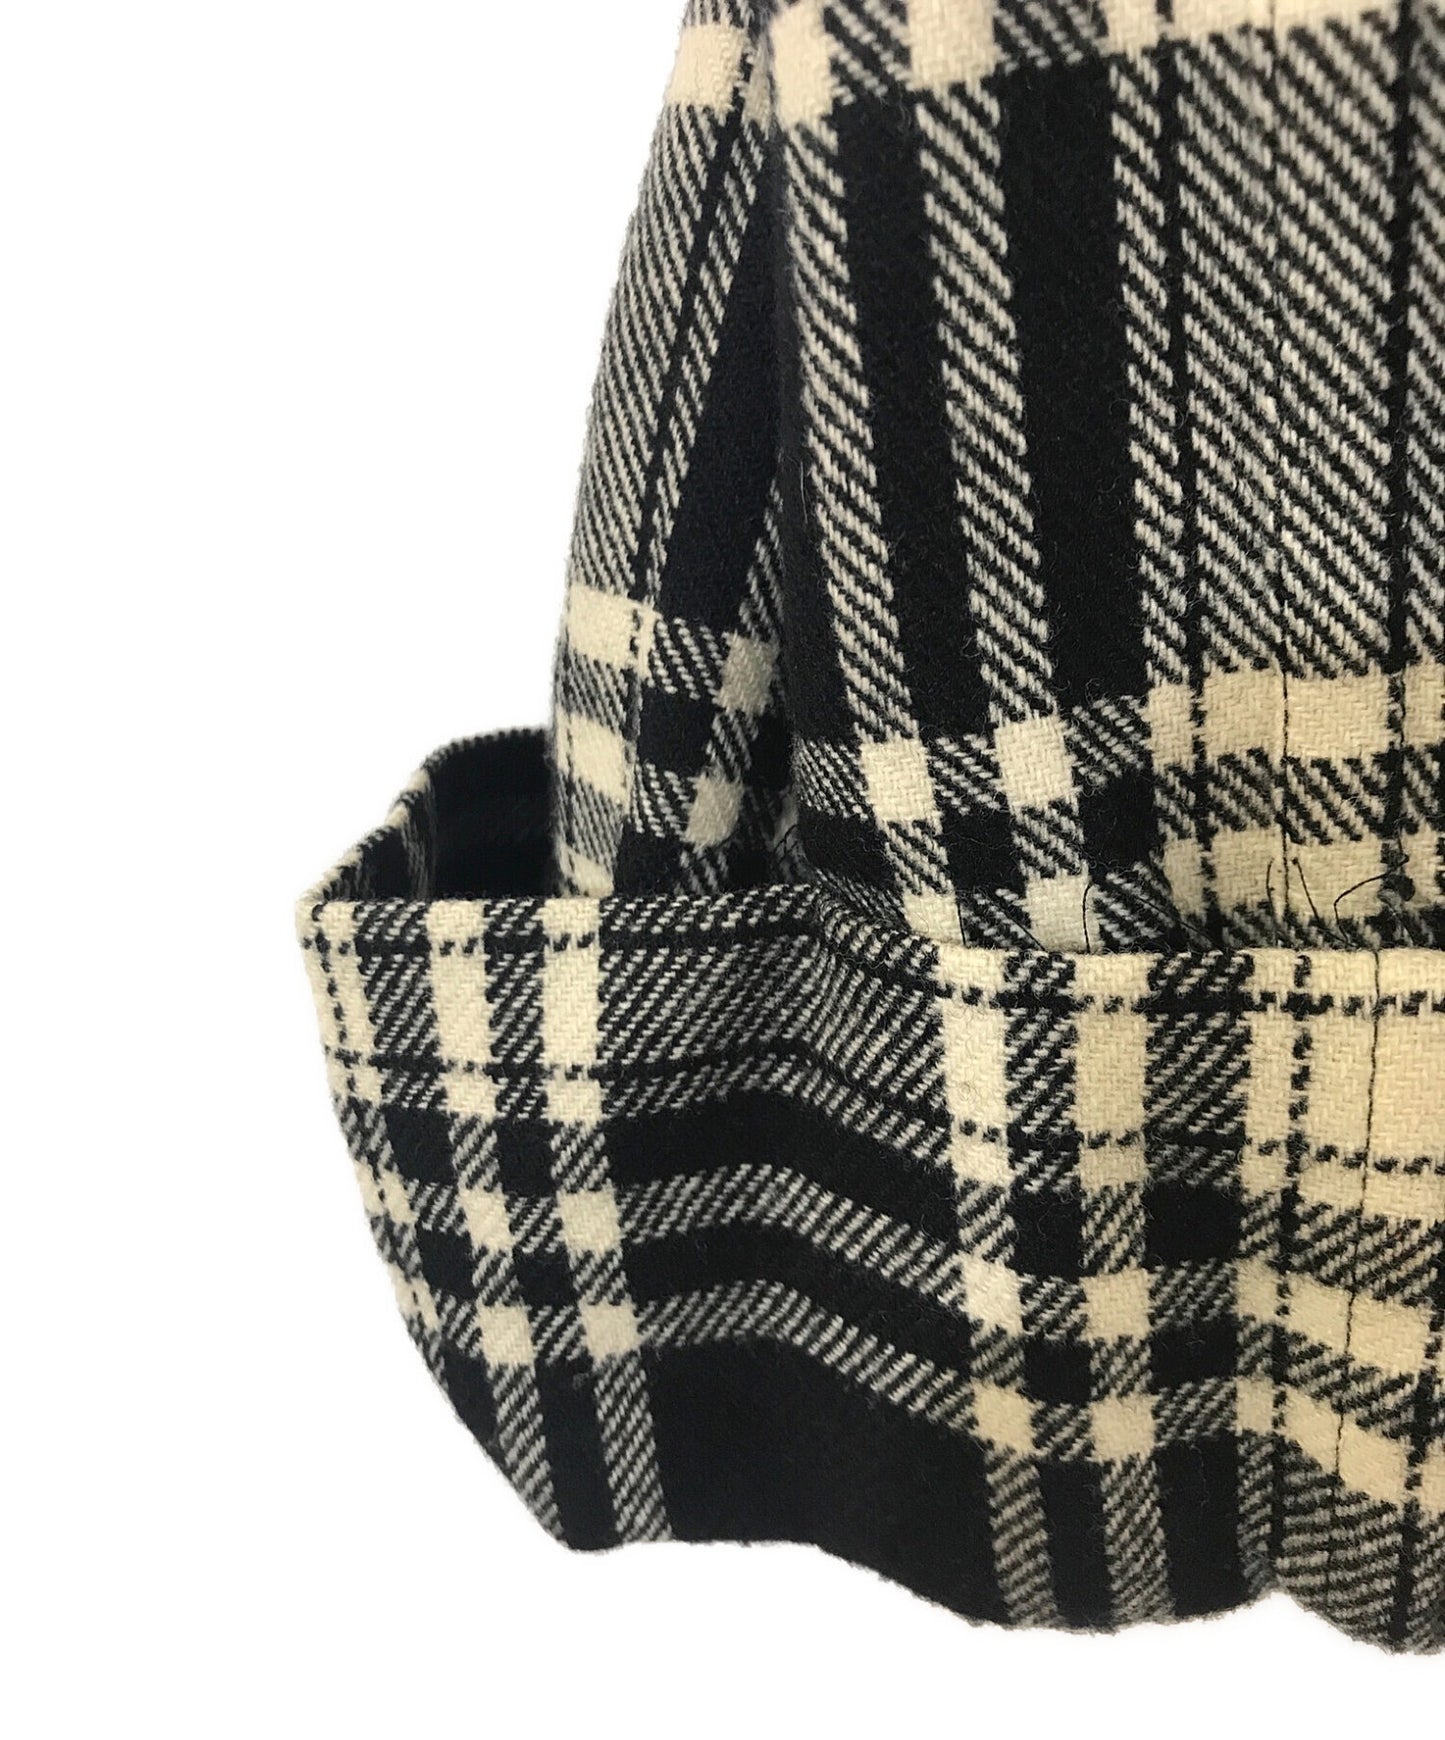 COMME des GARCONS Wool check skirt pants GP-040280